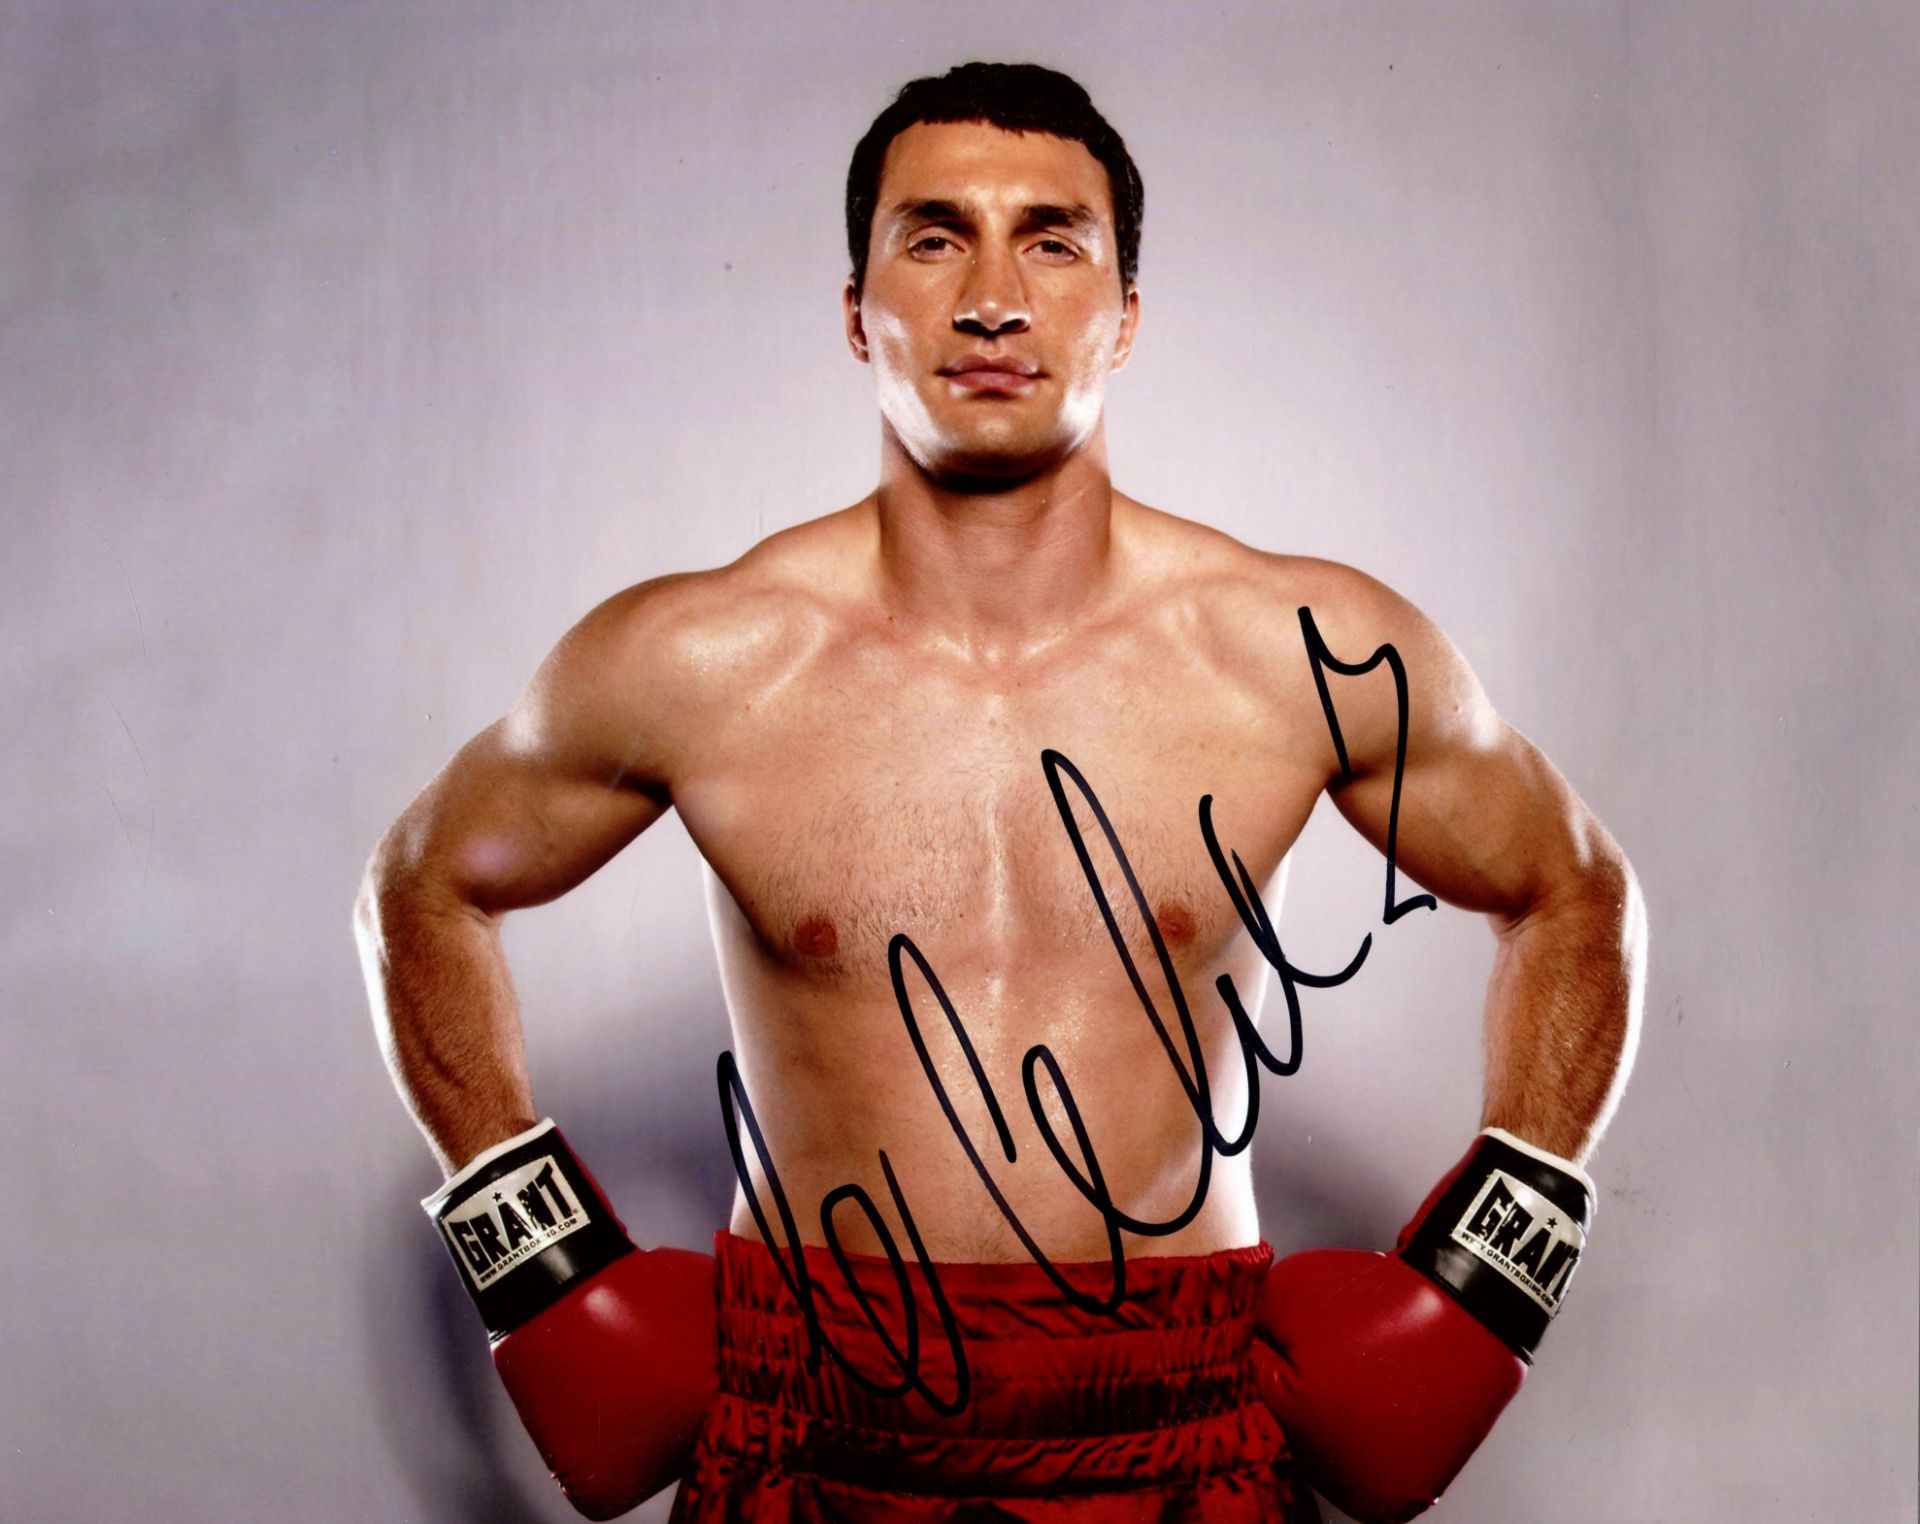 KLITSCHKO WLADIMIR: (1976- ) Ukrainian former professional Boxer, considered to be one of the best